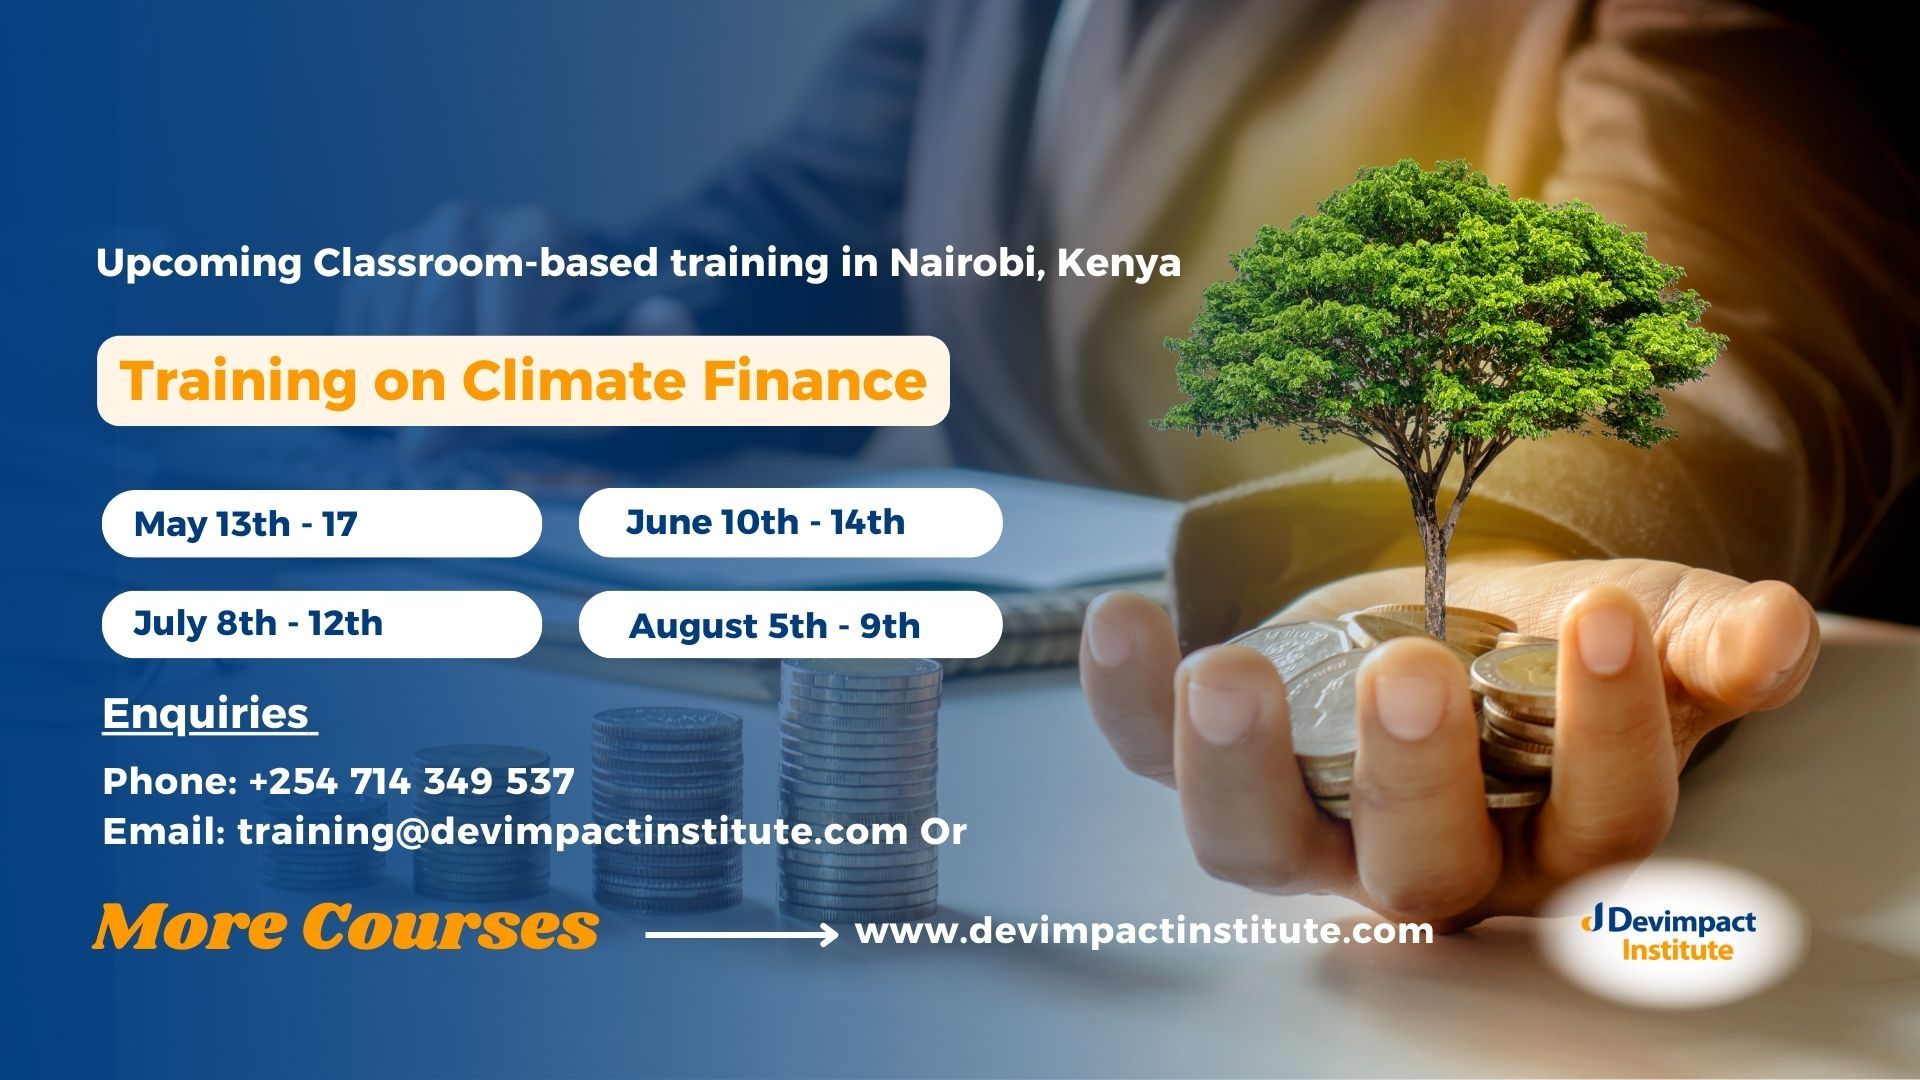 Training on Climate Finance, Devimpact Institute, Nairobi, Kenya